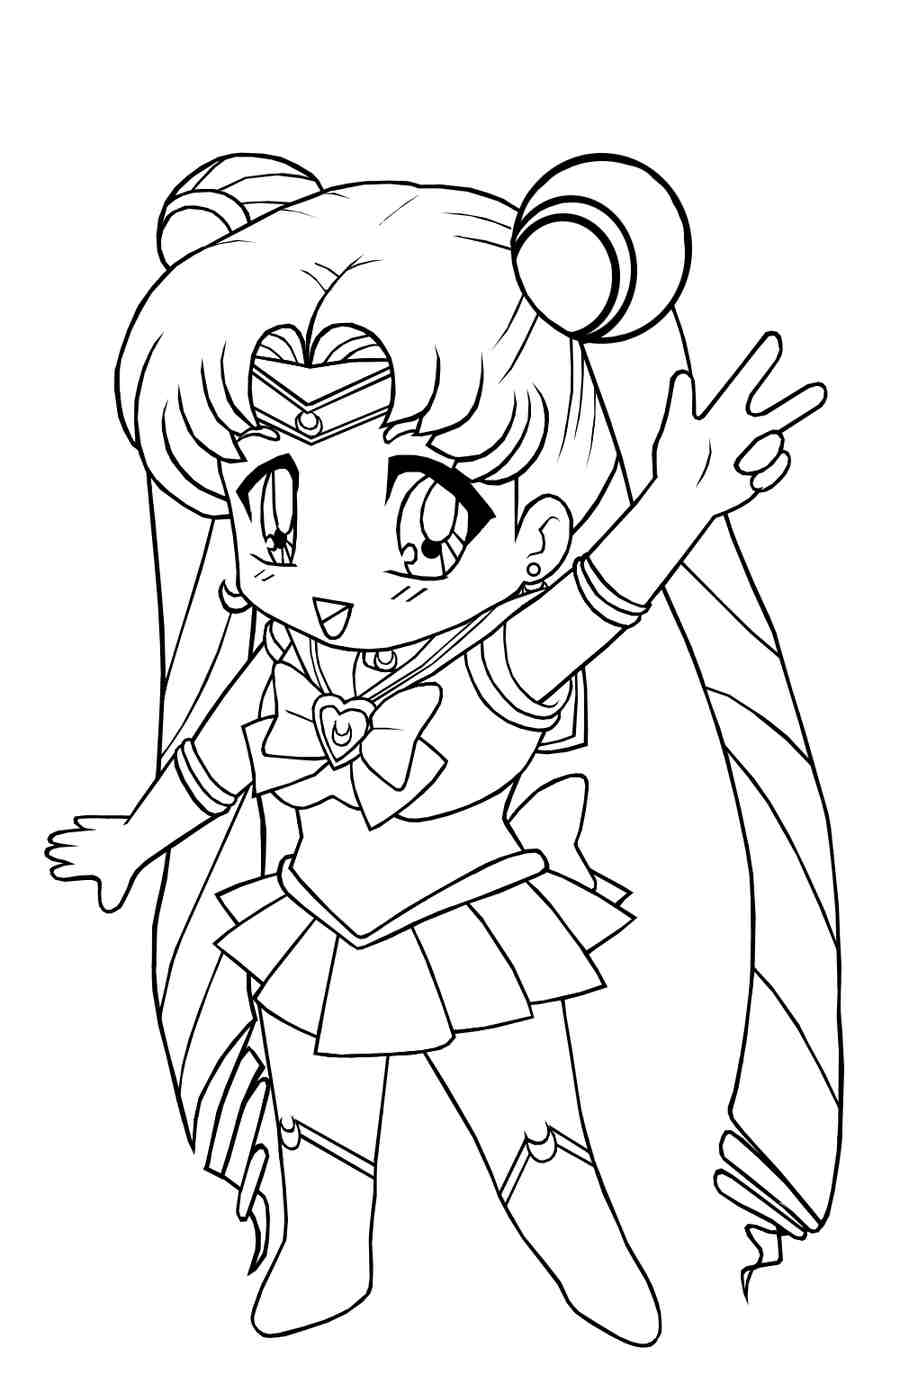 Happy Chibi Sailor Moon Wears A Short-sleeved Sailor Uniform Coloring Pages